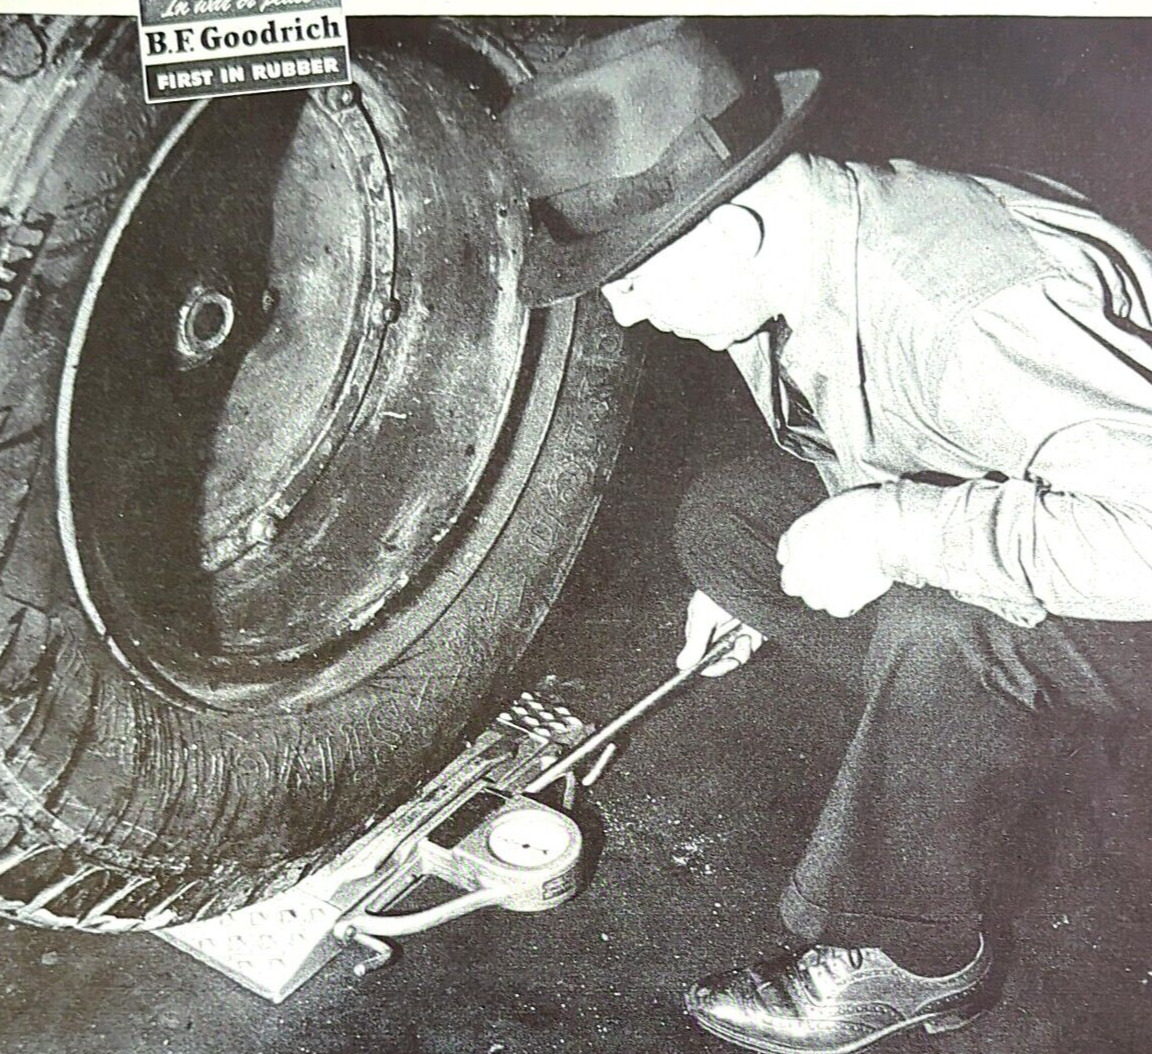 1944 B F Goodrich Truck Bus Tires Vintage Print Ad Man Weighing Axle Wheel